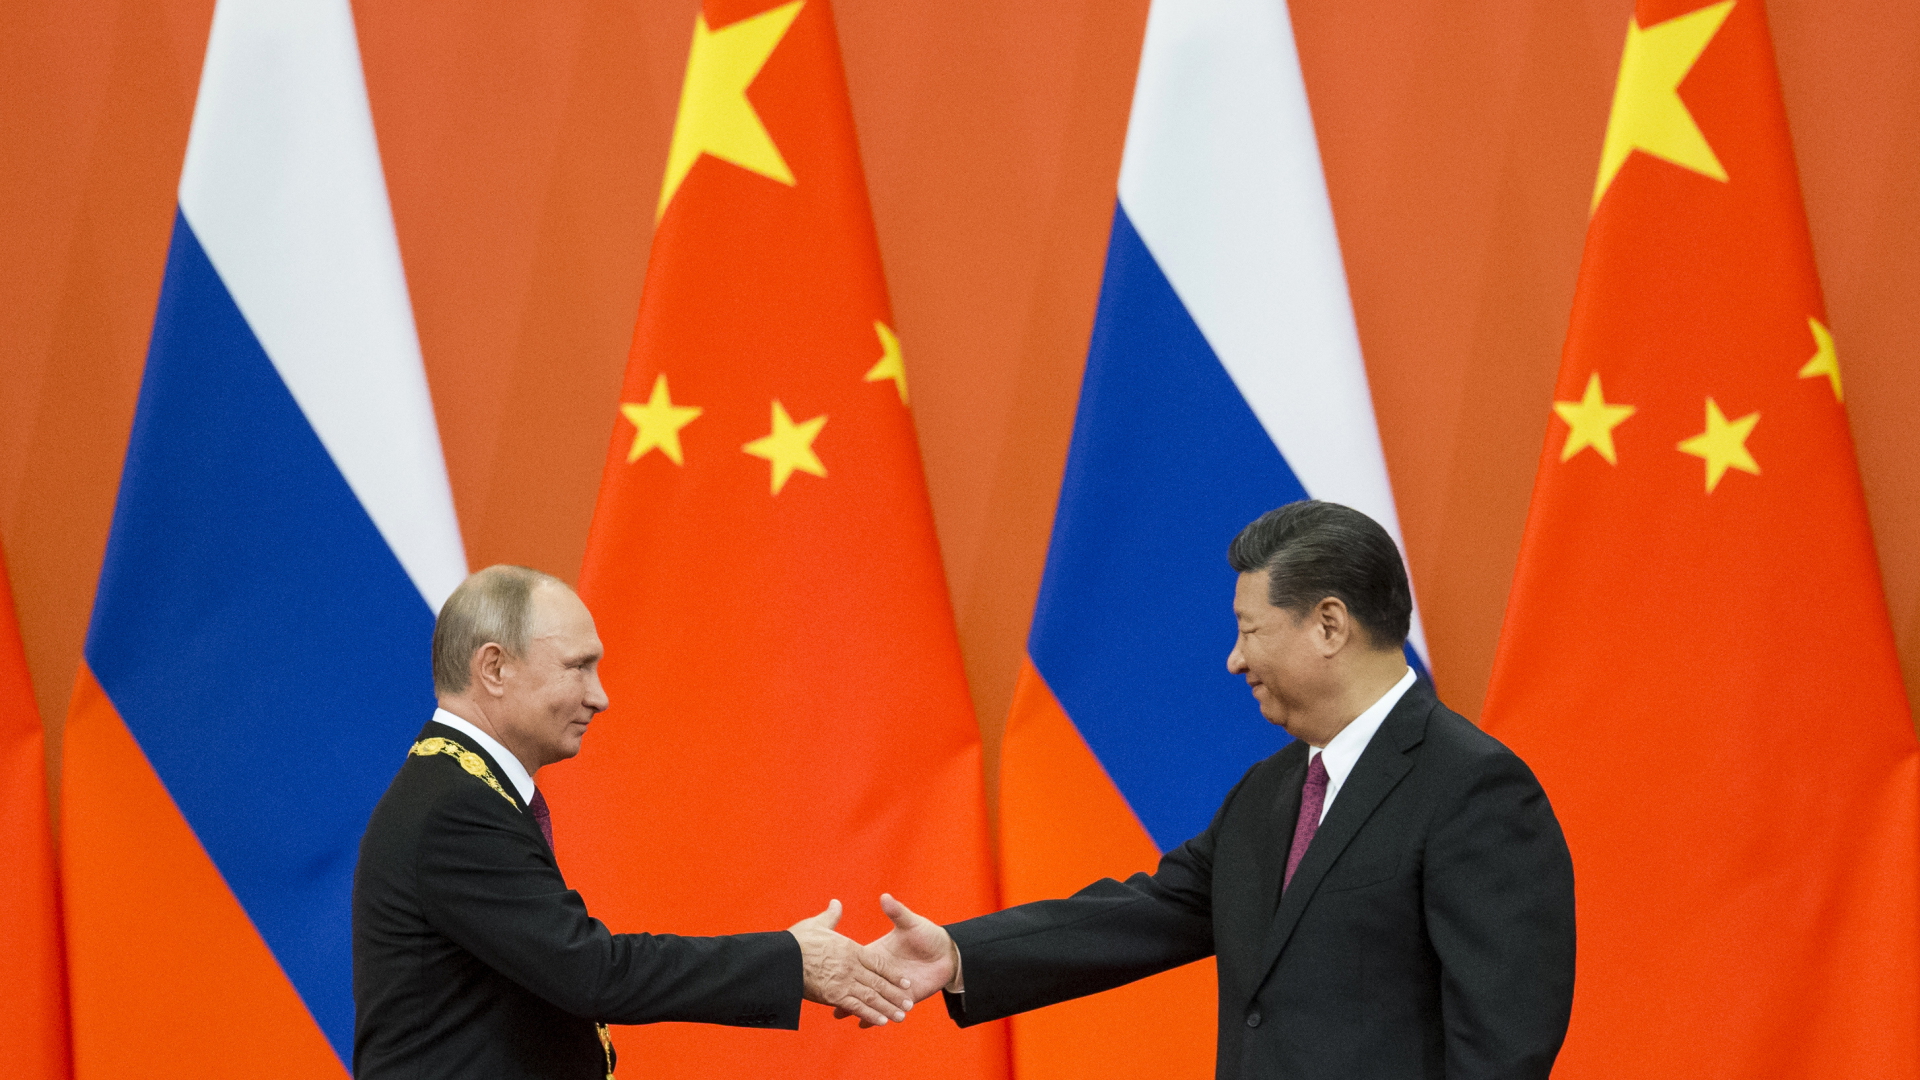 Gipfel in Usbekistan: Putin will Xi treffen